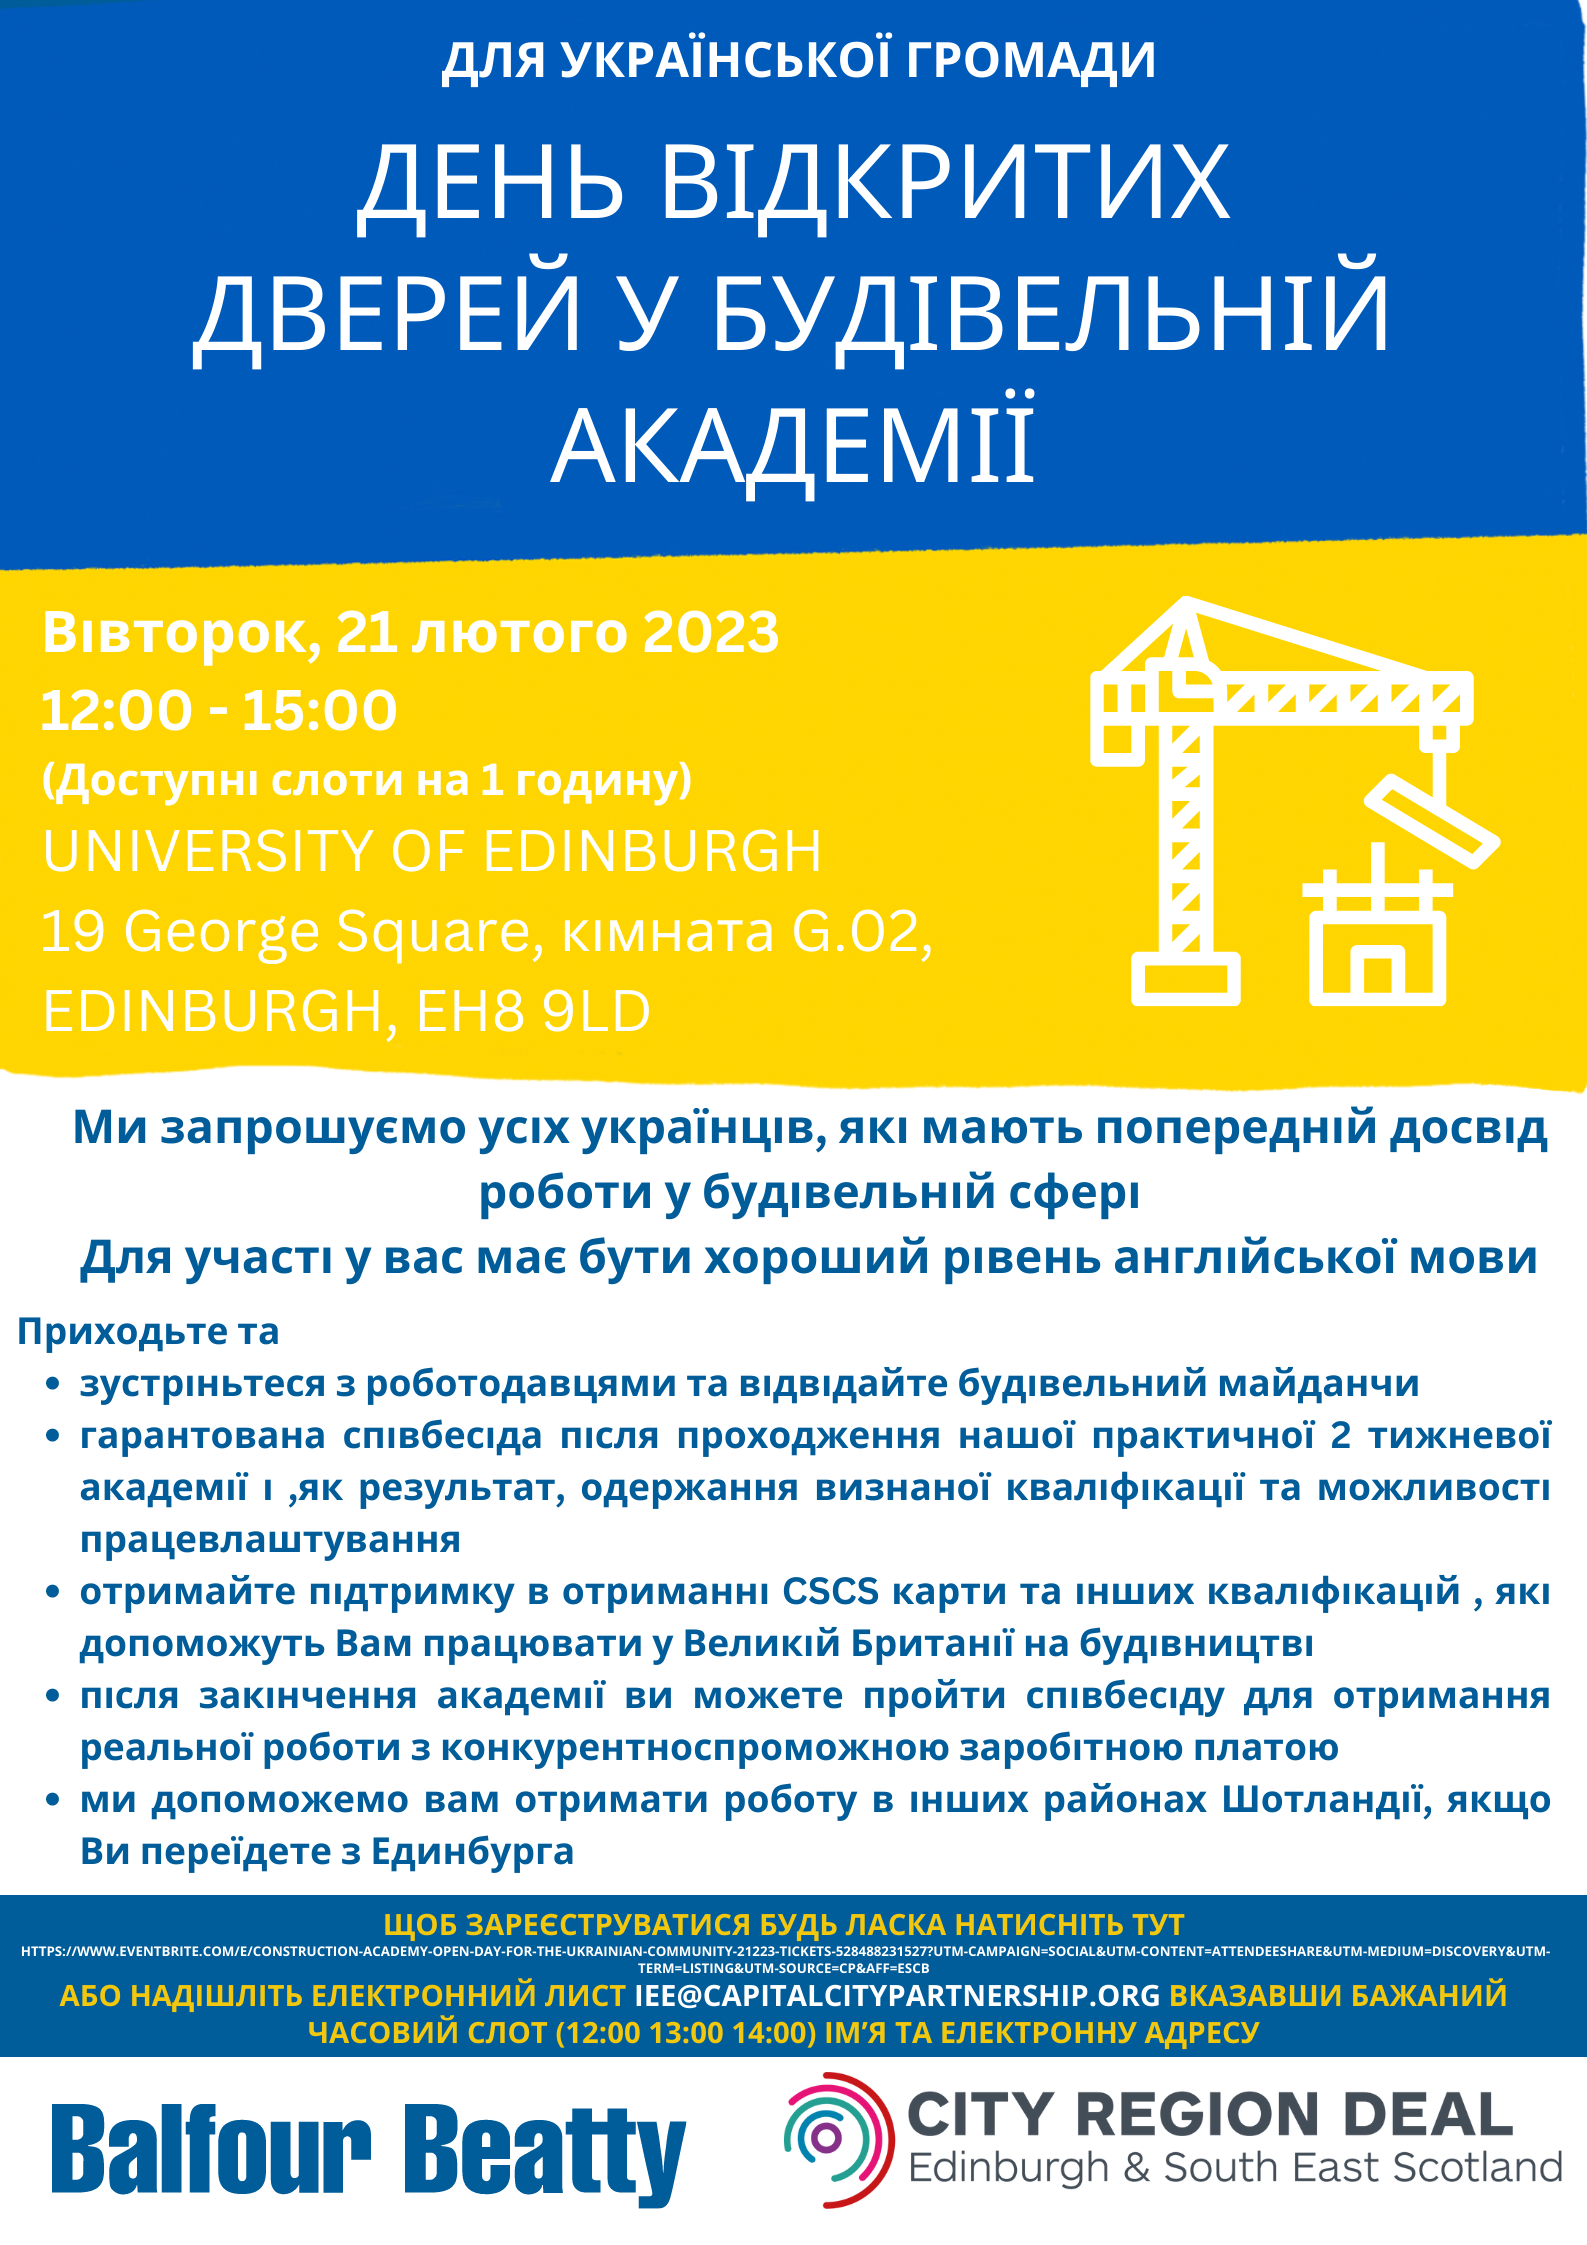 Ukrainian Construction academy ukrainian translation